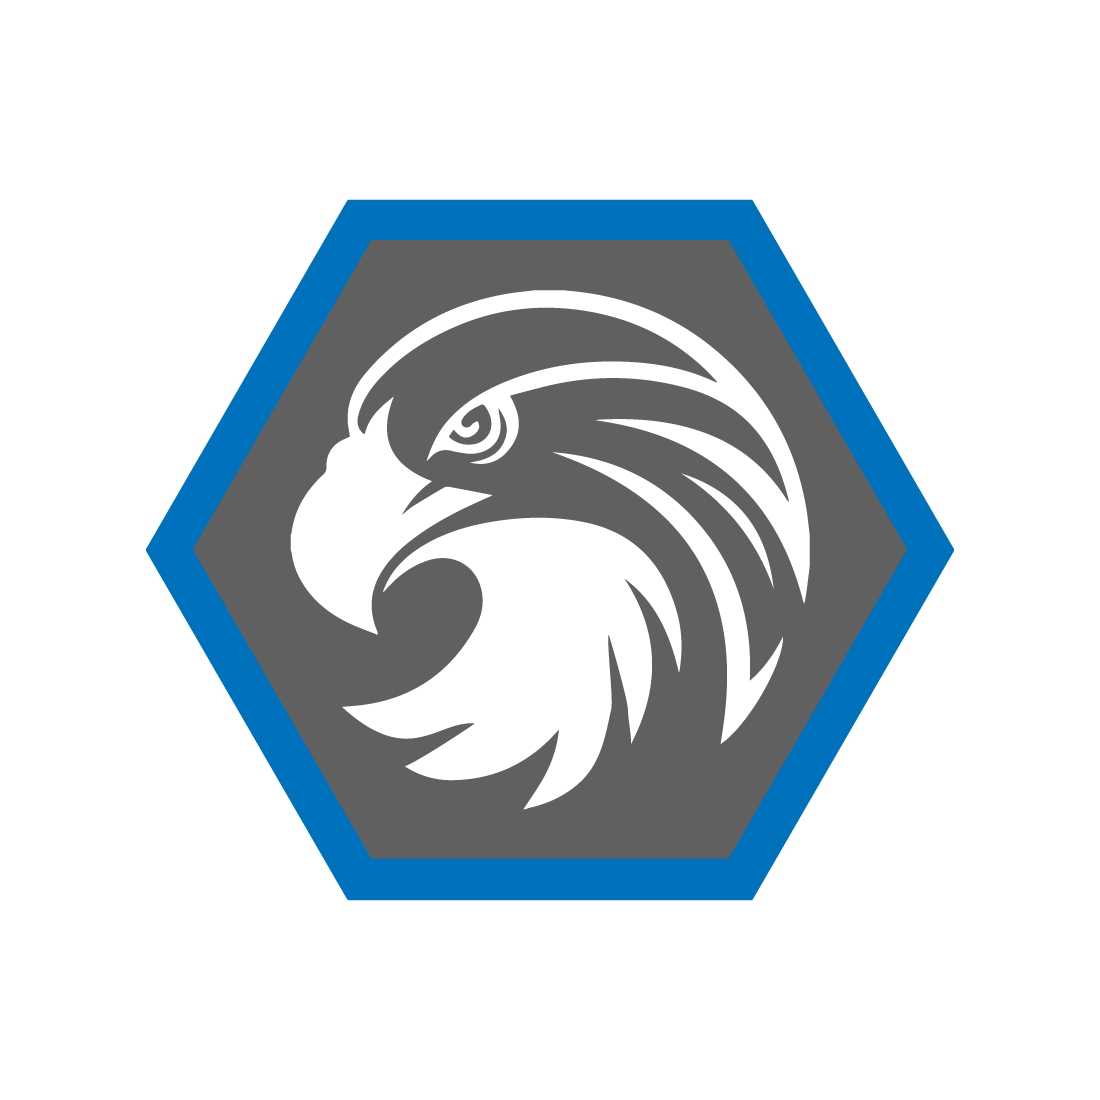 Eagle Bird Logo design vector images Luxury Bird logo design template icon Eagle Bird Face logo monogram best icon preview image.